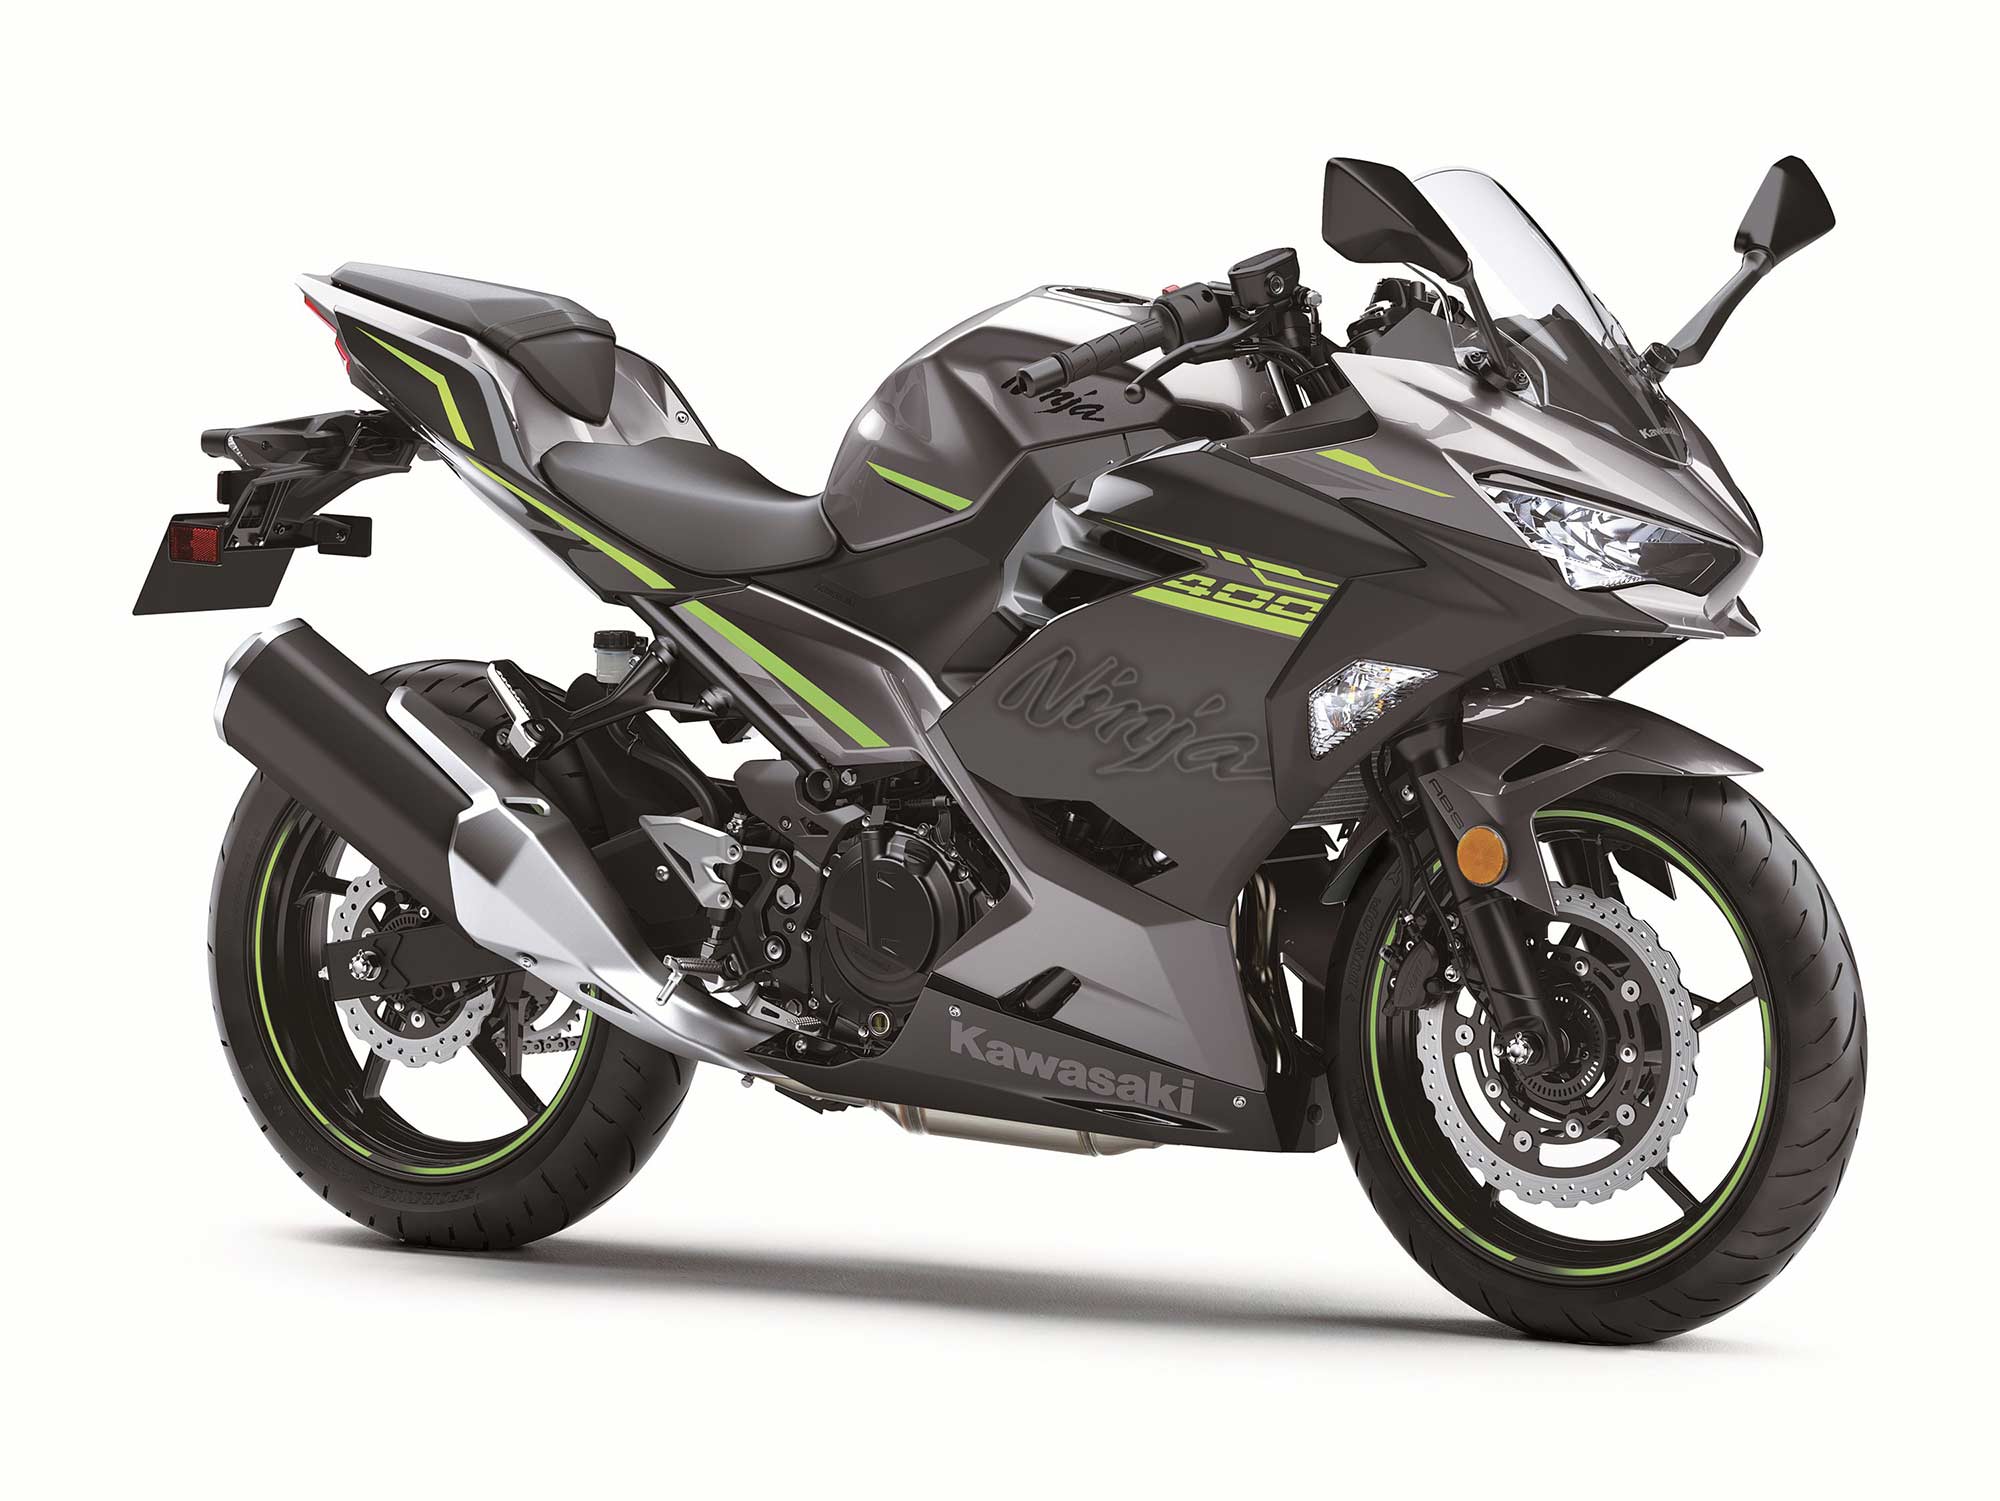 2021 Kawasaki Ninja 400 Buyer's Guide: Specs, Photos, Price